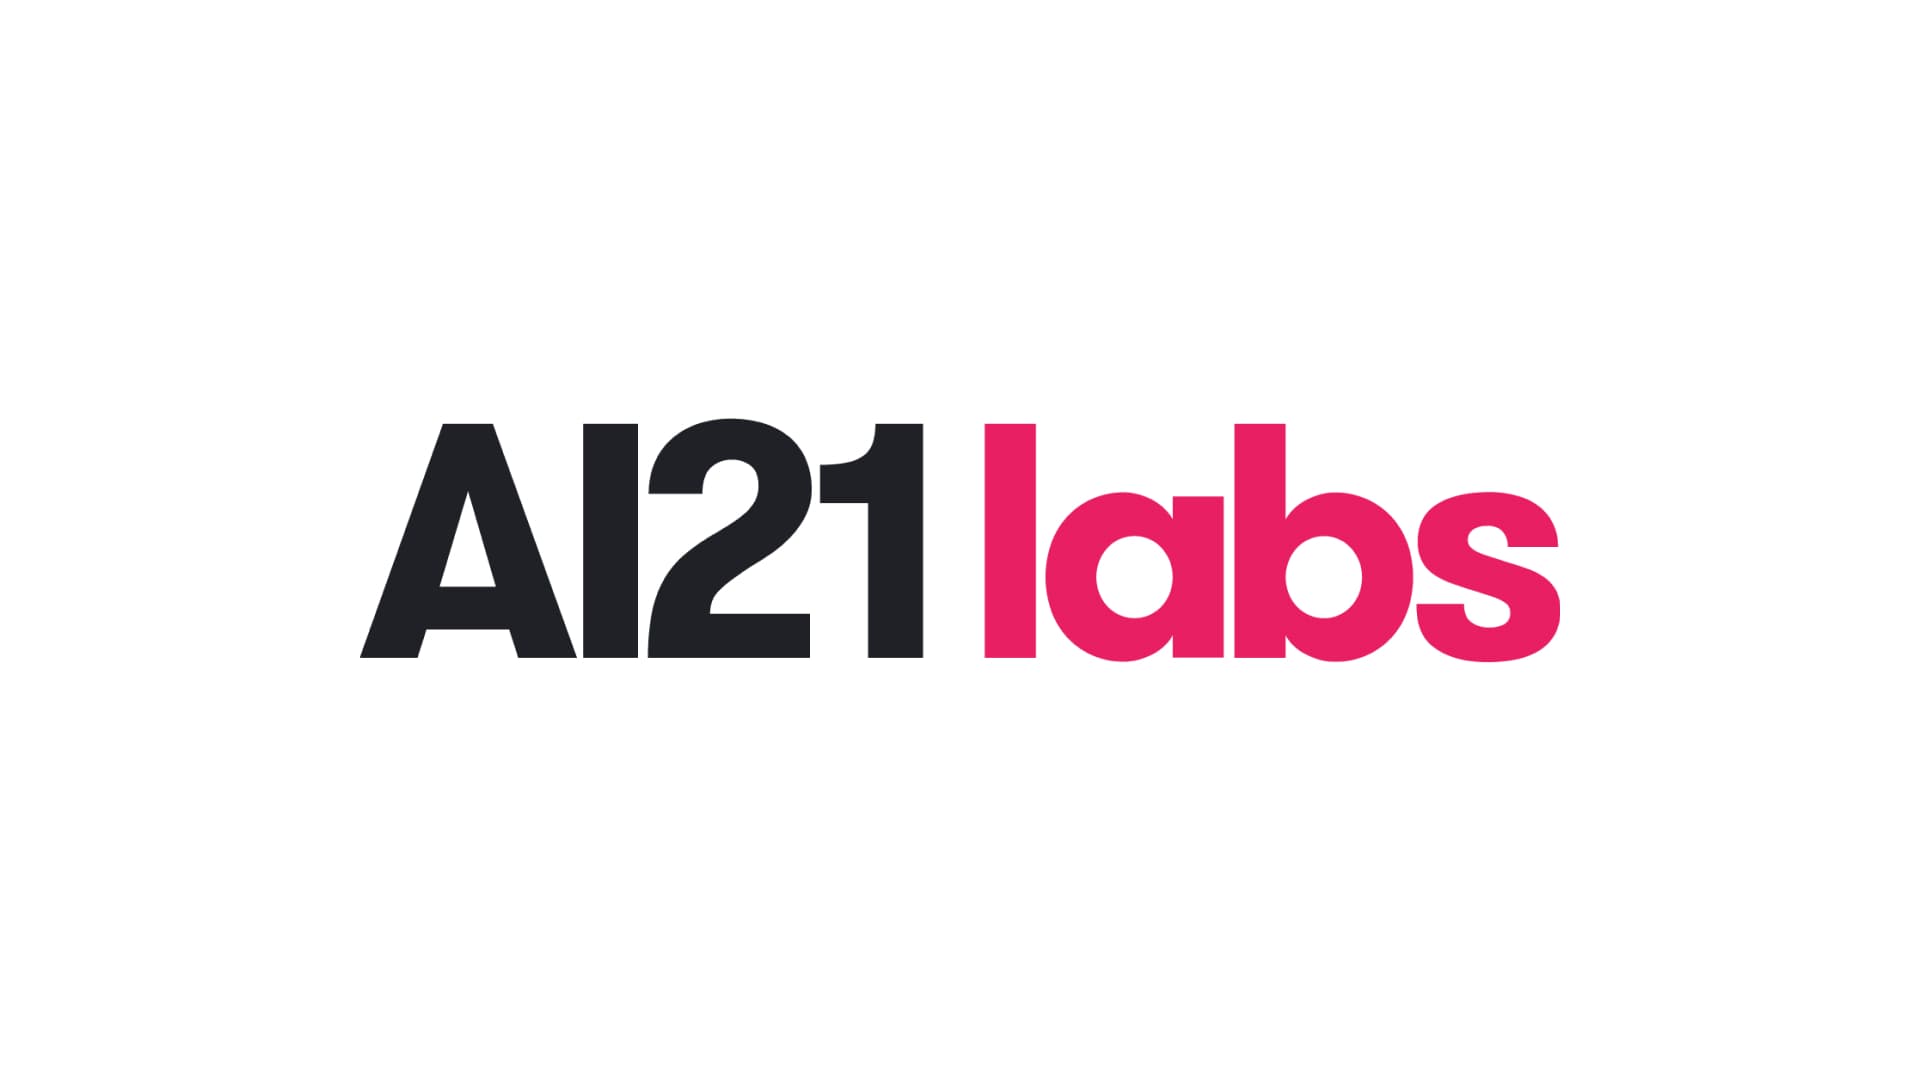 AI21 Labs、シリーズC追加ラウンドにて5,300万ドルの資金調達